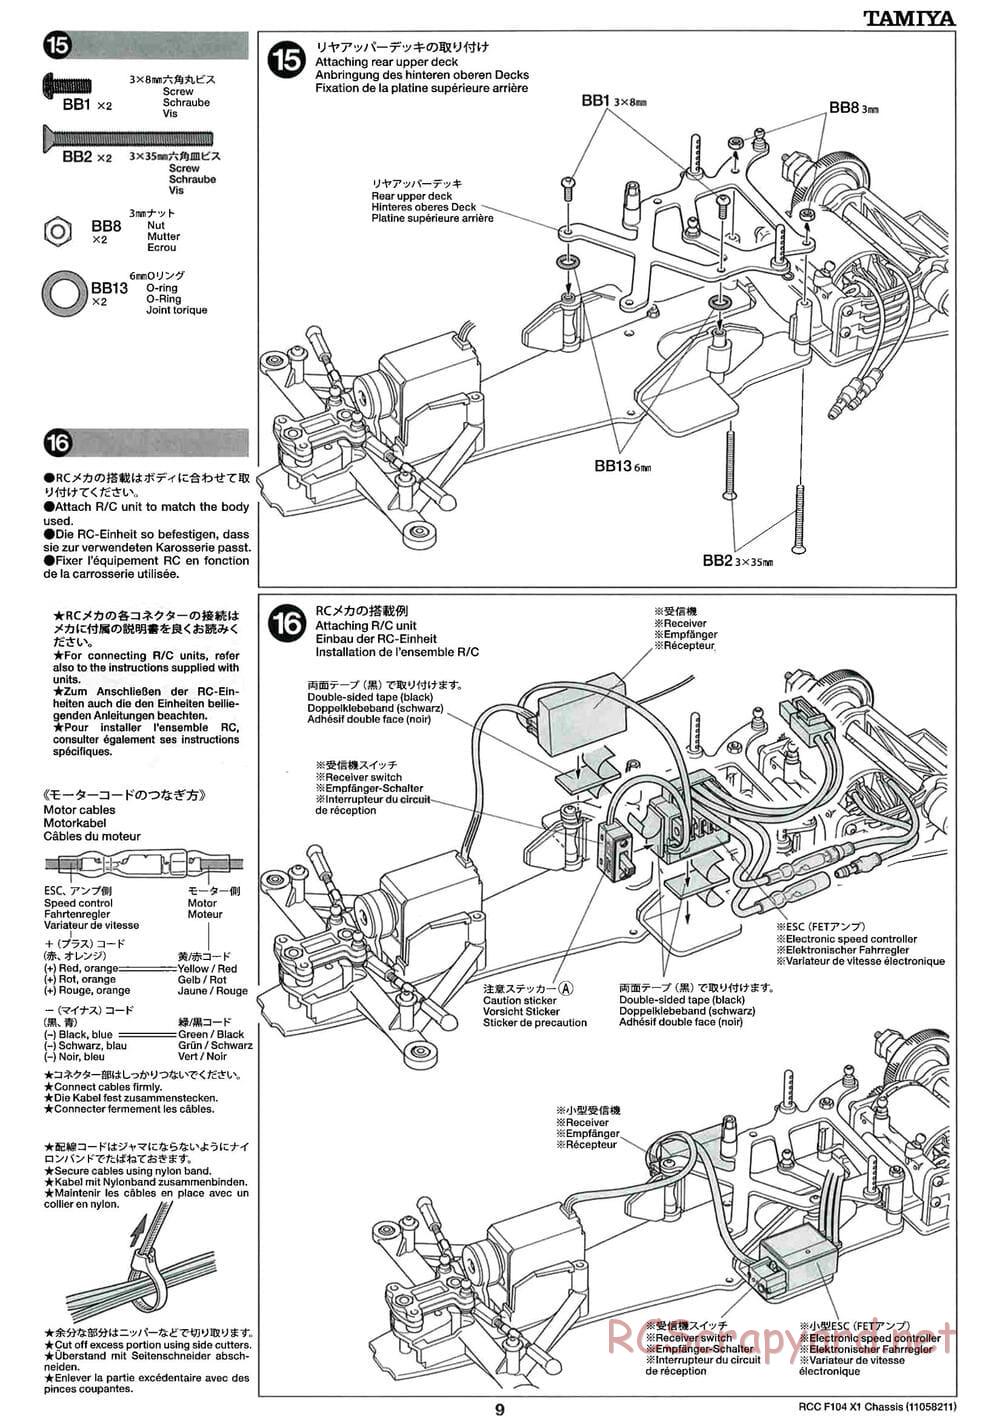 Tamiya - F104X1 Chassis - Manual - Page 9